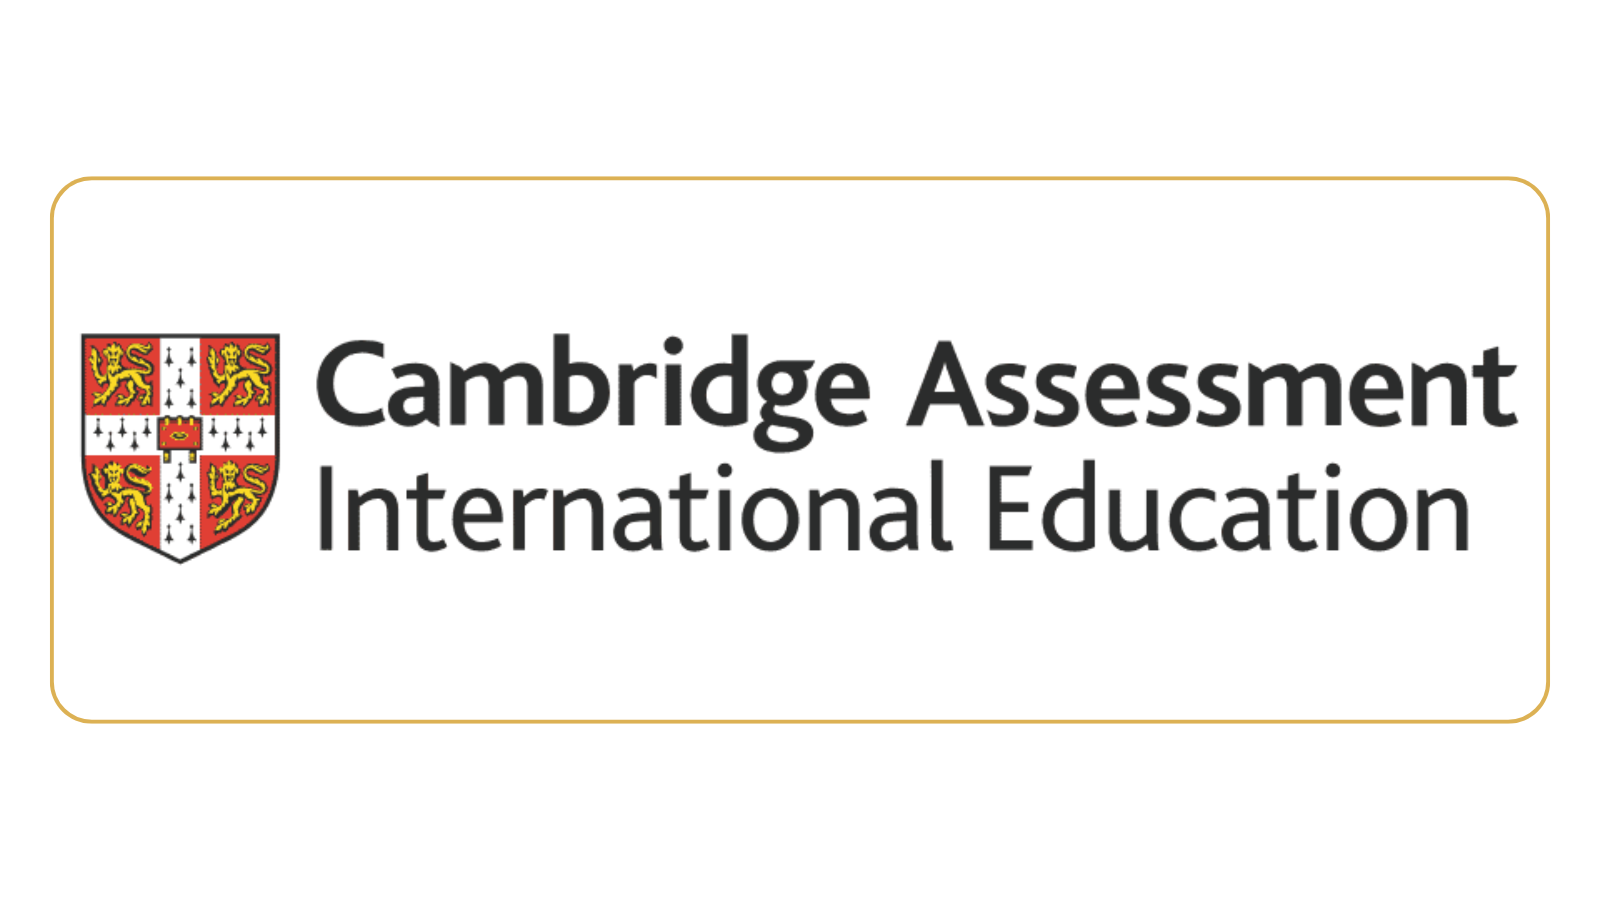 cambridge assessment international education mesa examinadora